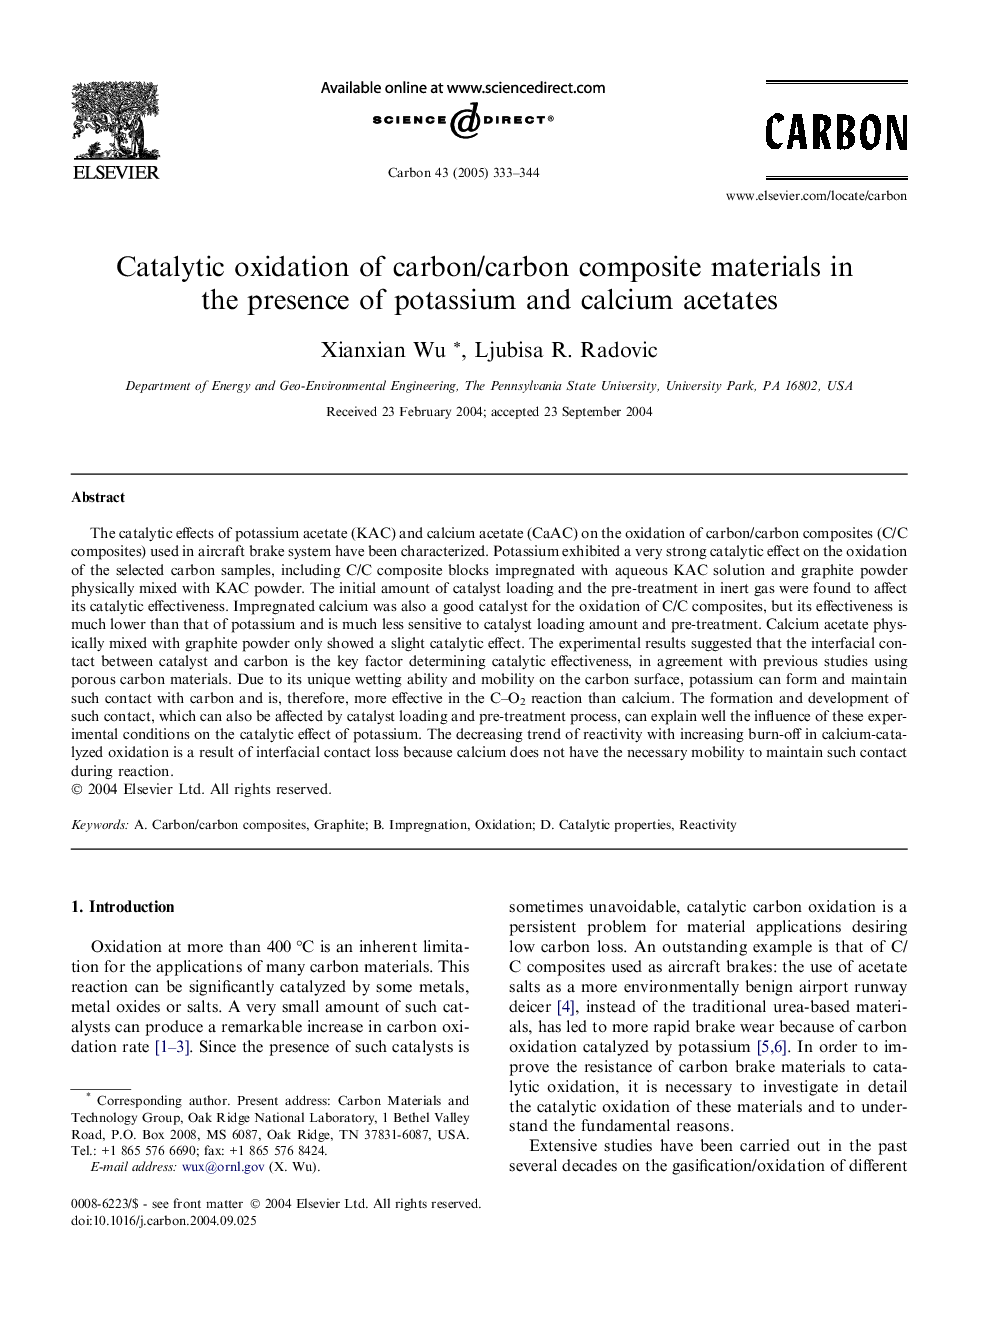 Catalytic oxidation of carbon/carbon composite materials in the presence of potassium and calcium acetates